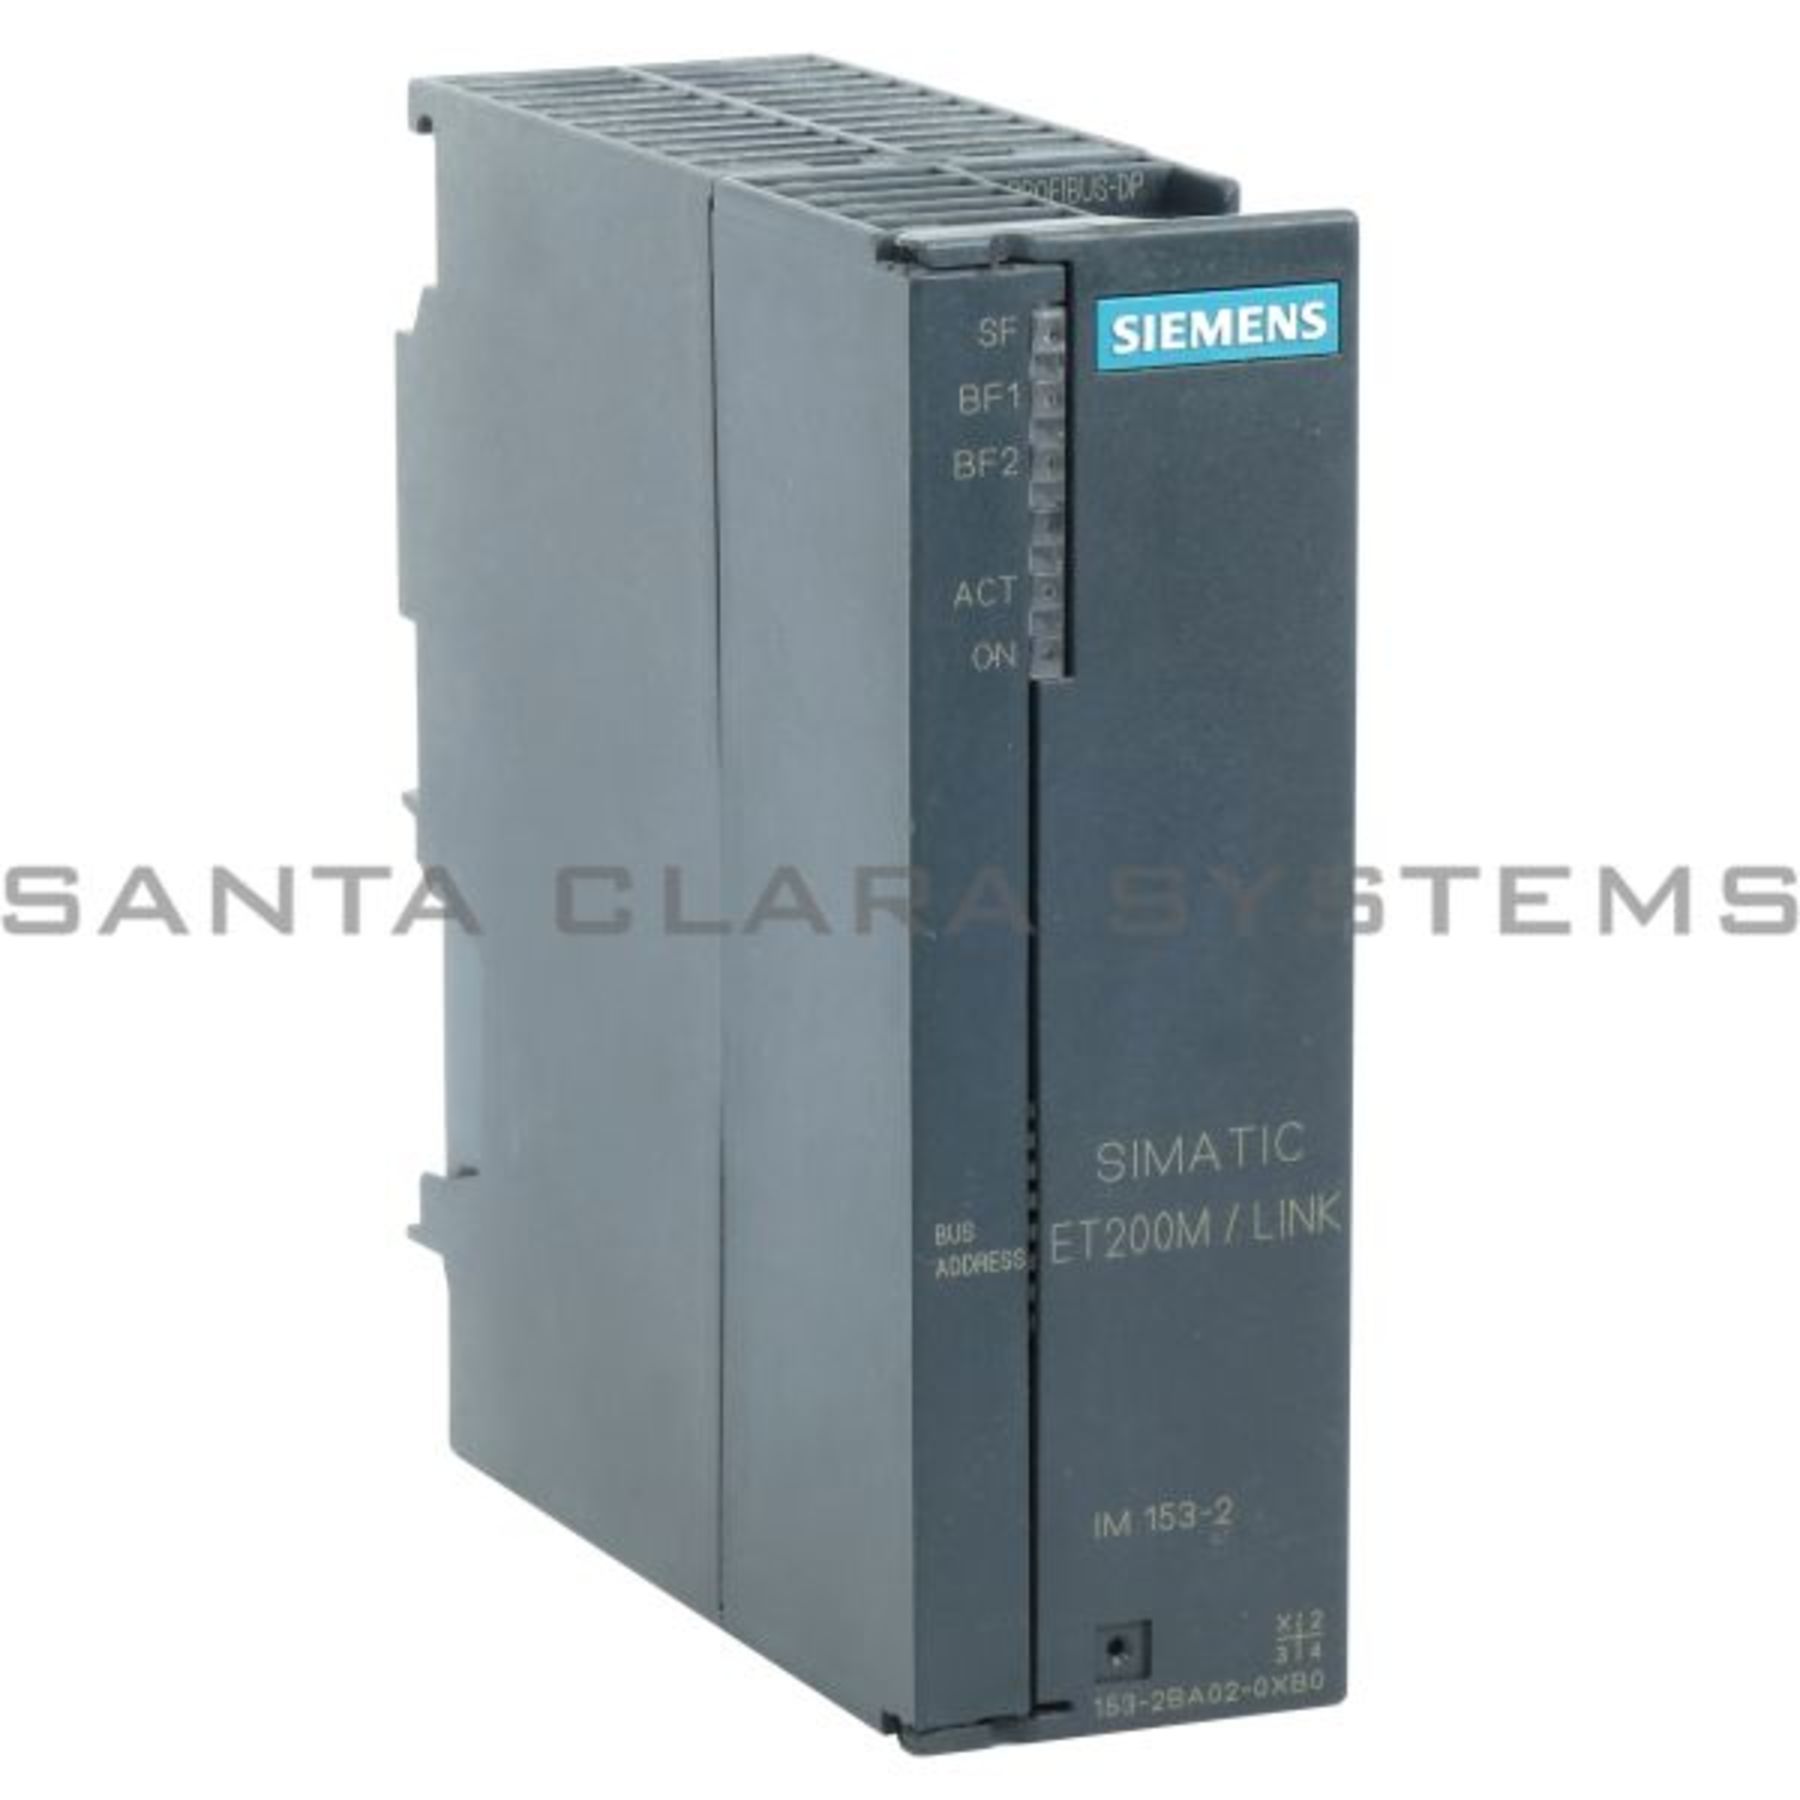 Siemens 6ES71532BA020XB0 Interface Module for sale online